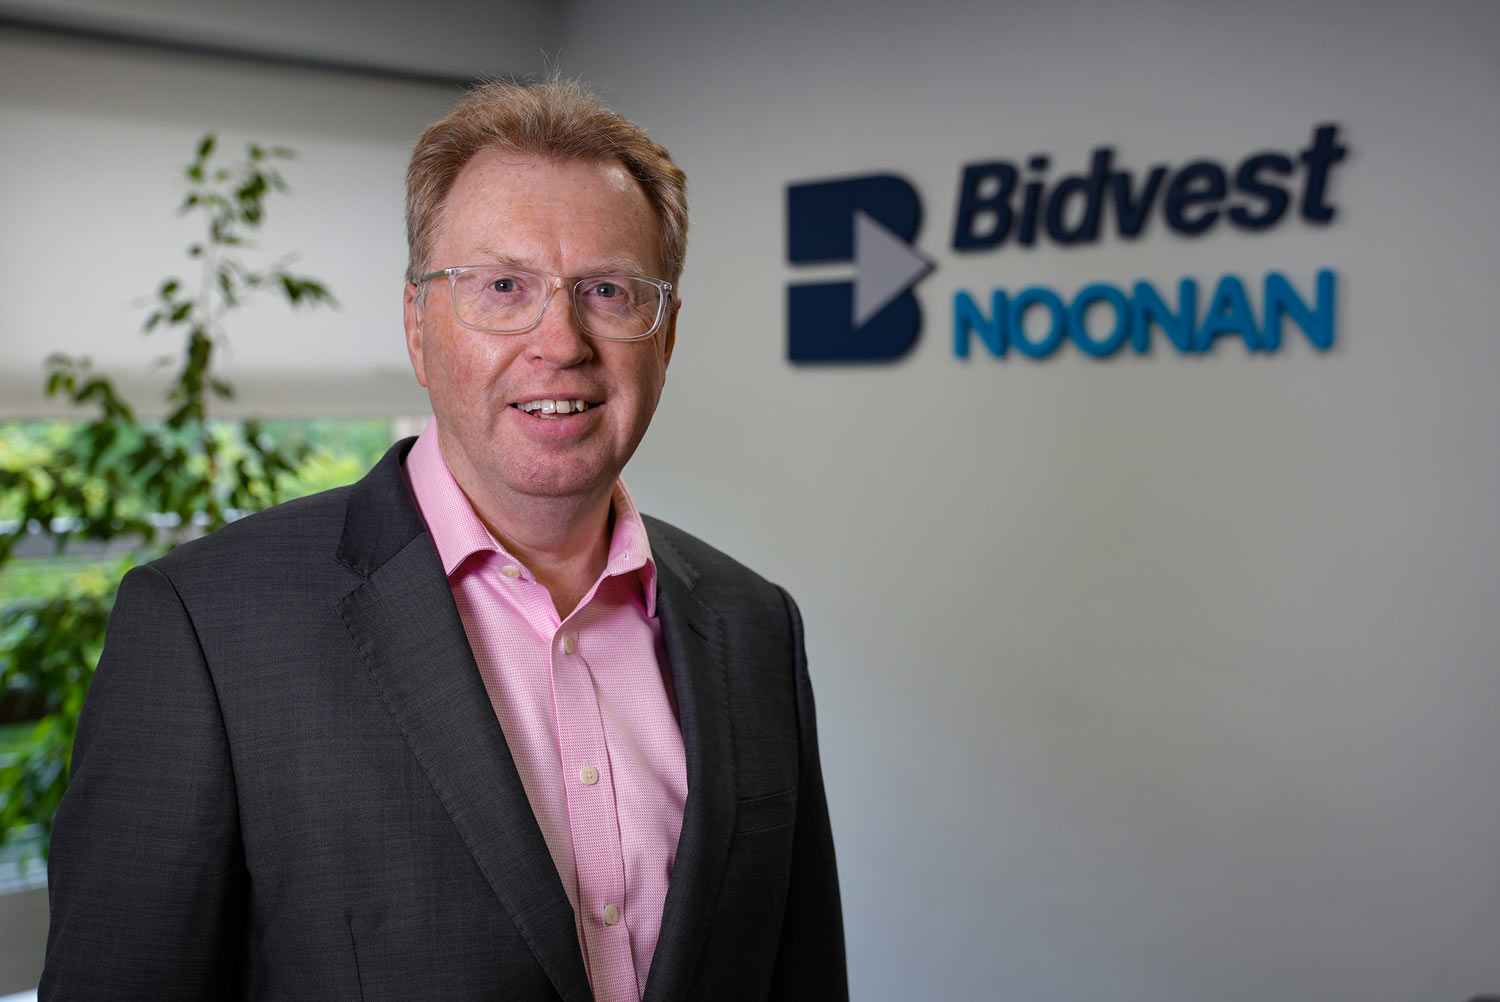 Bidvest Noonan Names New CEO for UK Business